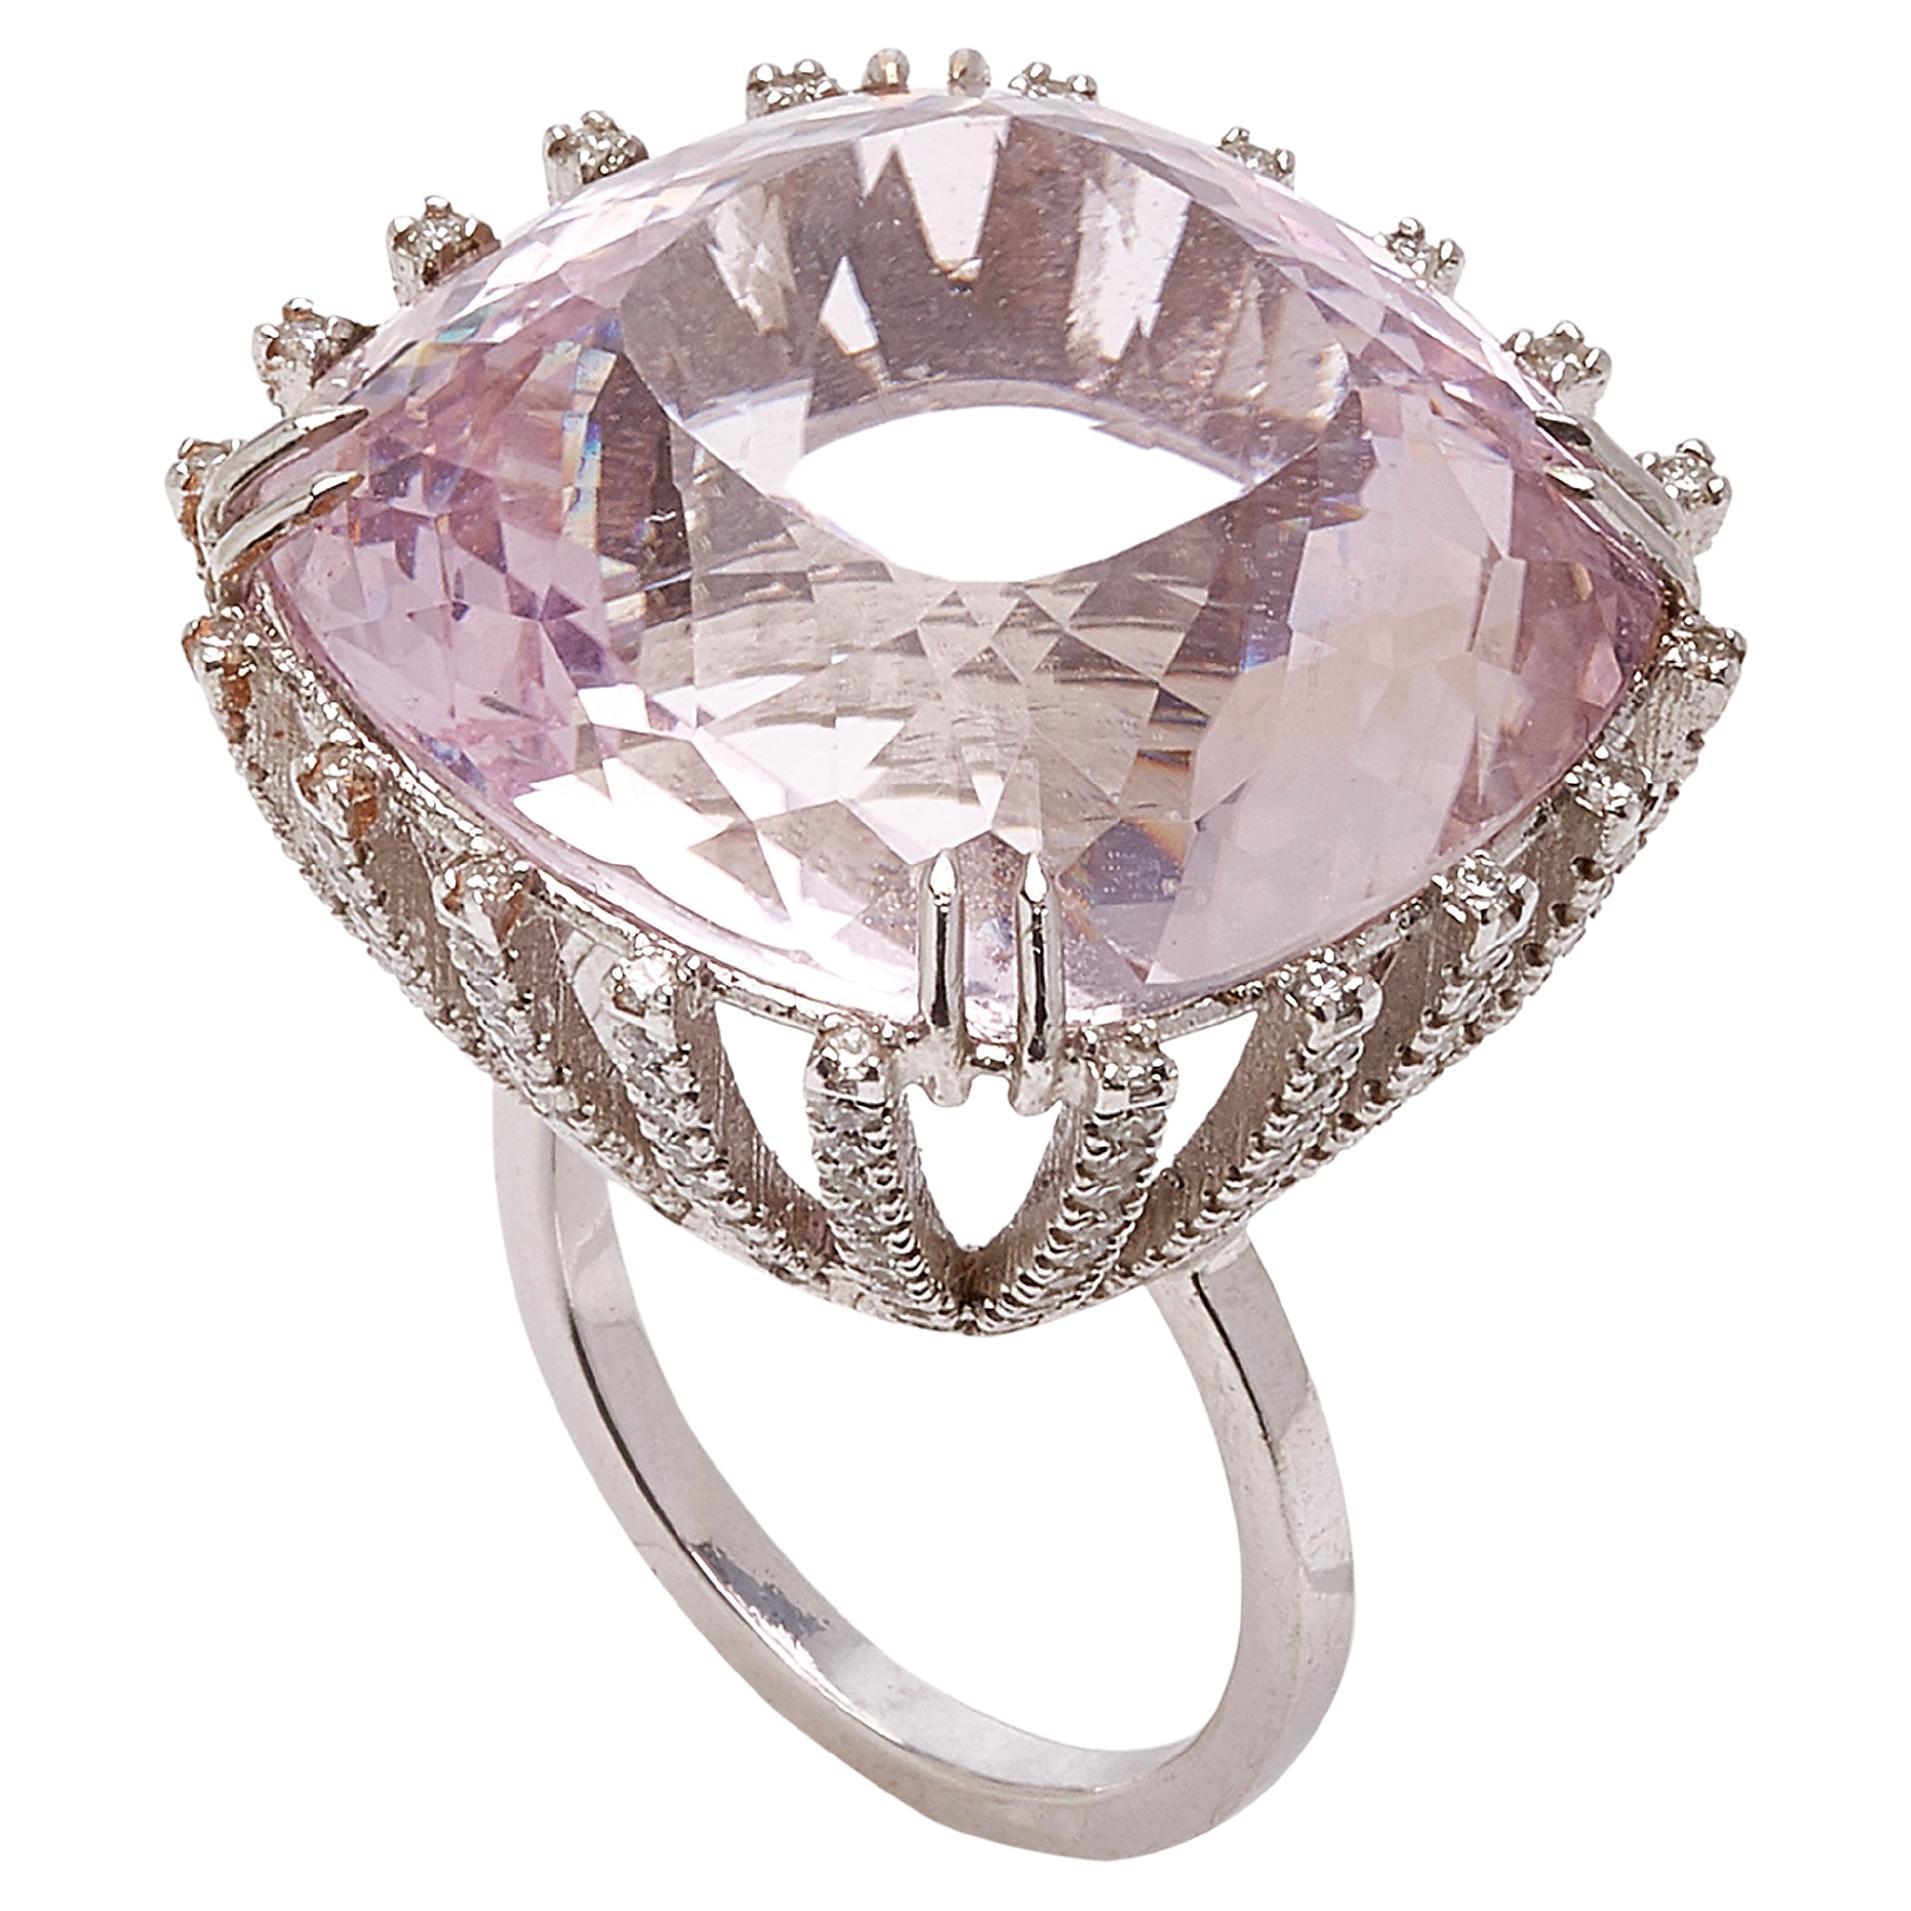 Pink Kunzite & White Diamonds Cocktail Ring in 18k White Gold